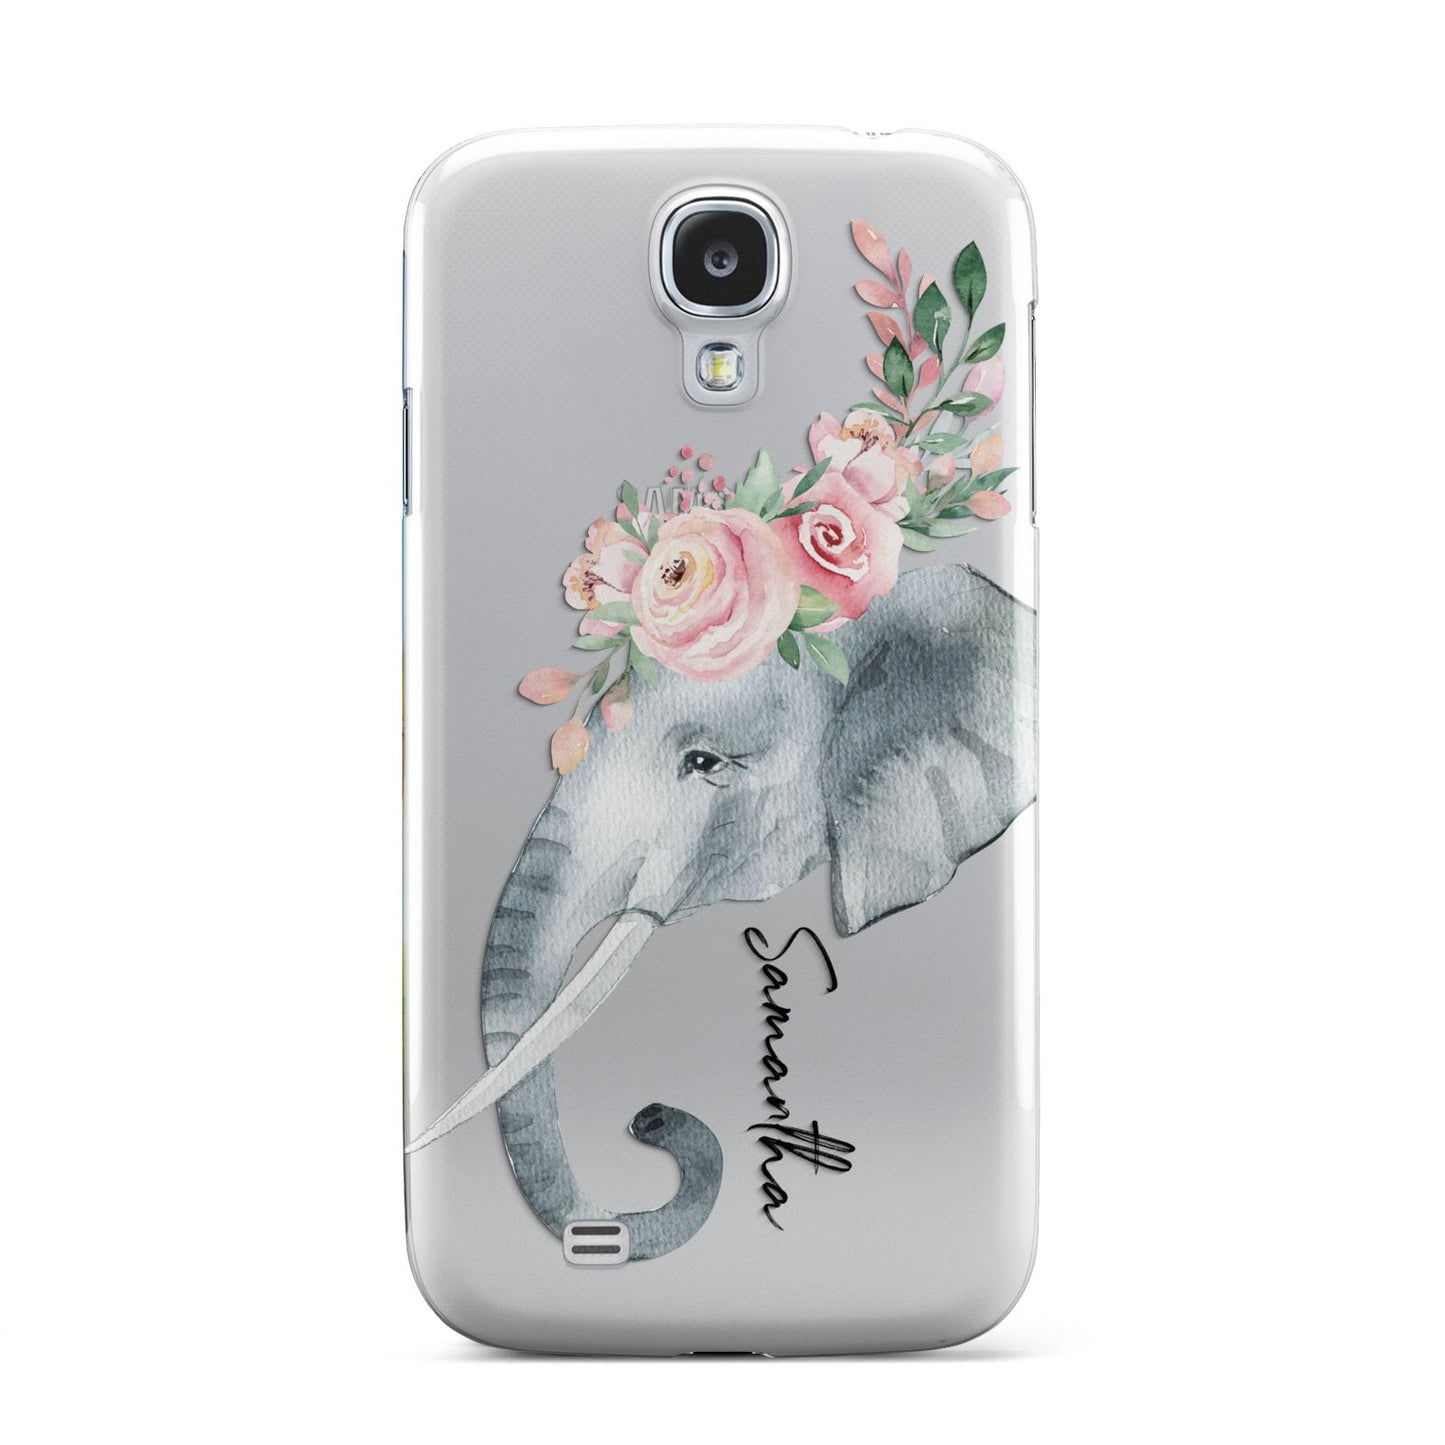 Personalised Elephant Samsung Galaxy S4 Case